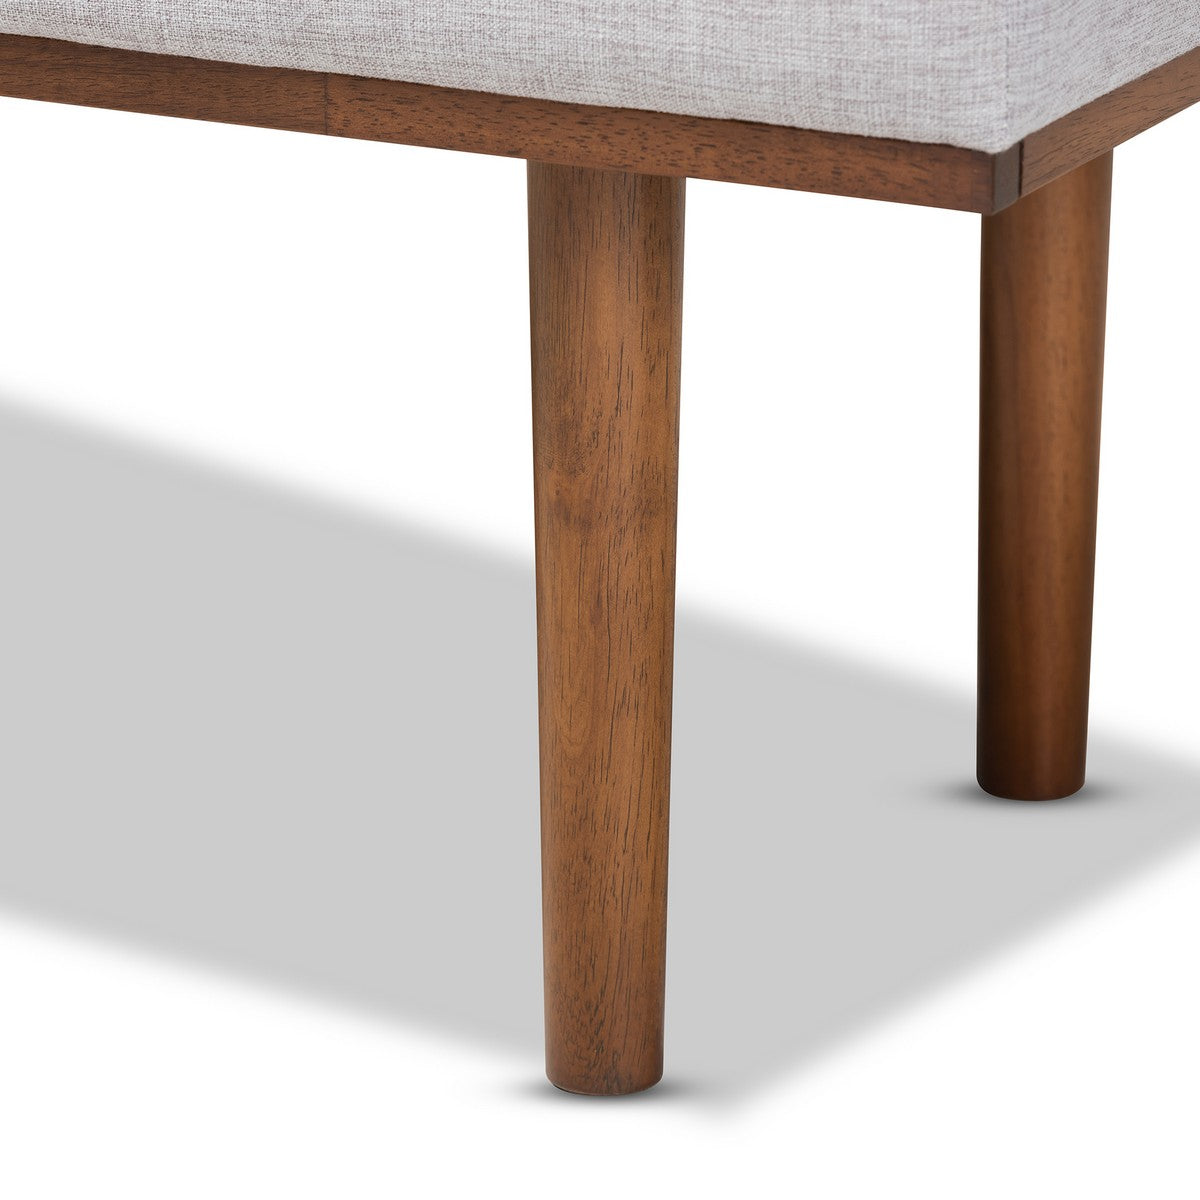 Baxton Studio Arne Mid-Century Modern Greyish Beige Fabric Upholstered Walnut Finished Bench